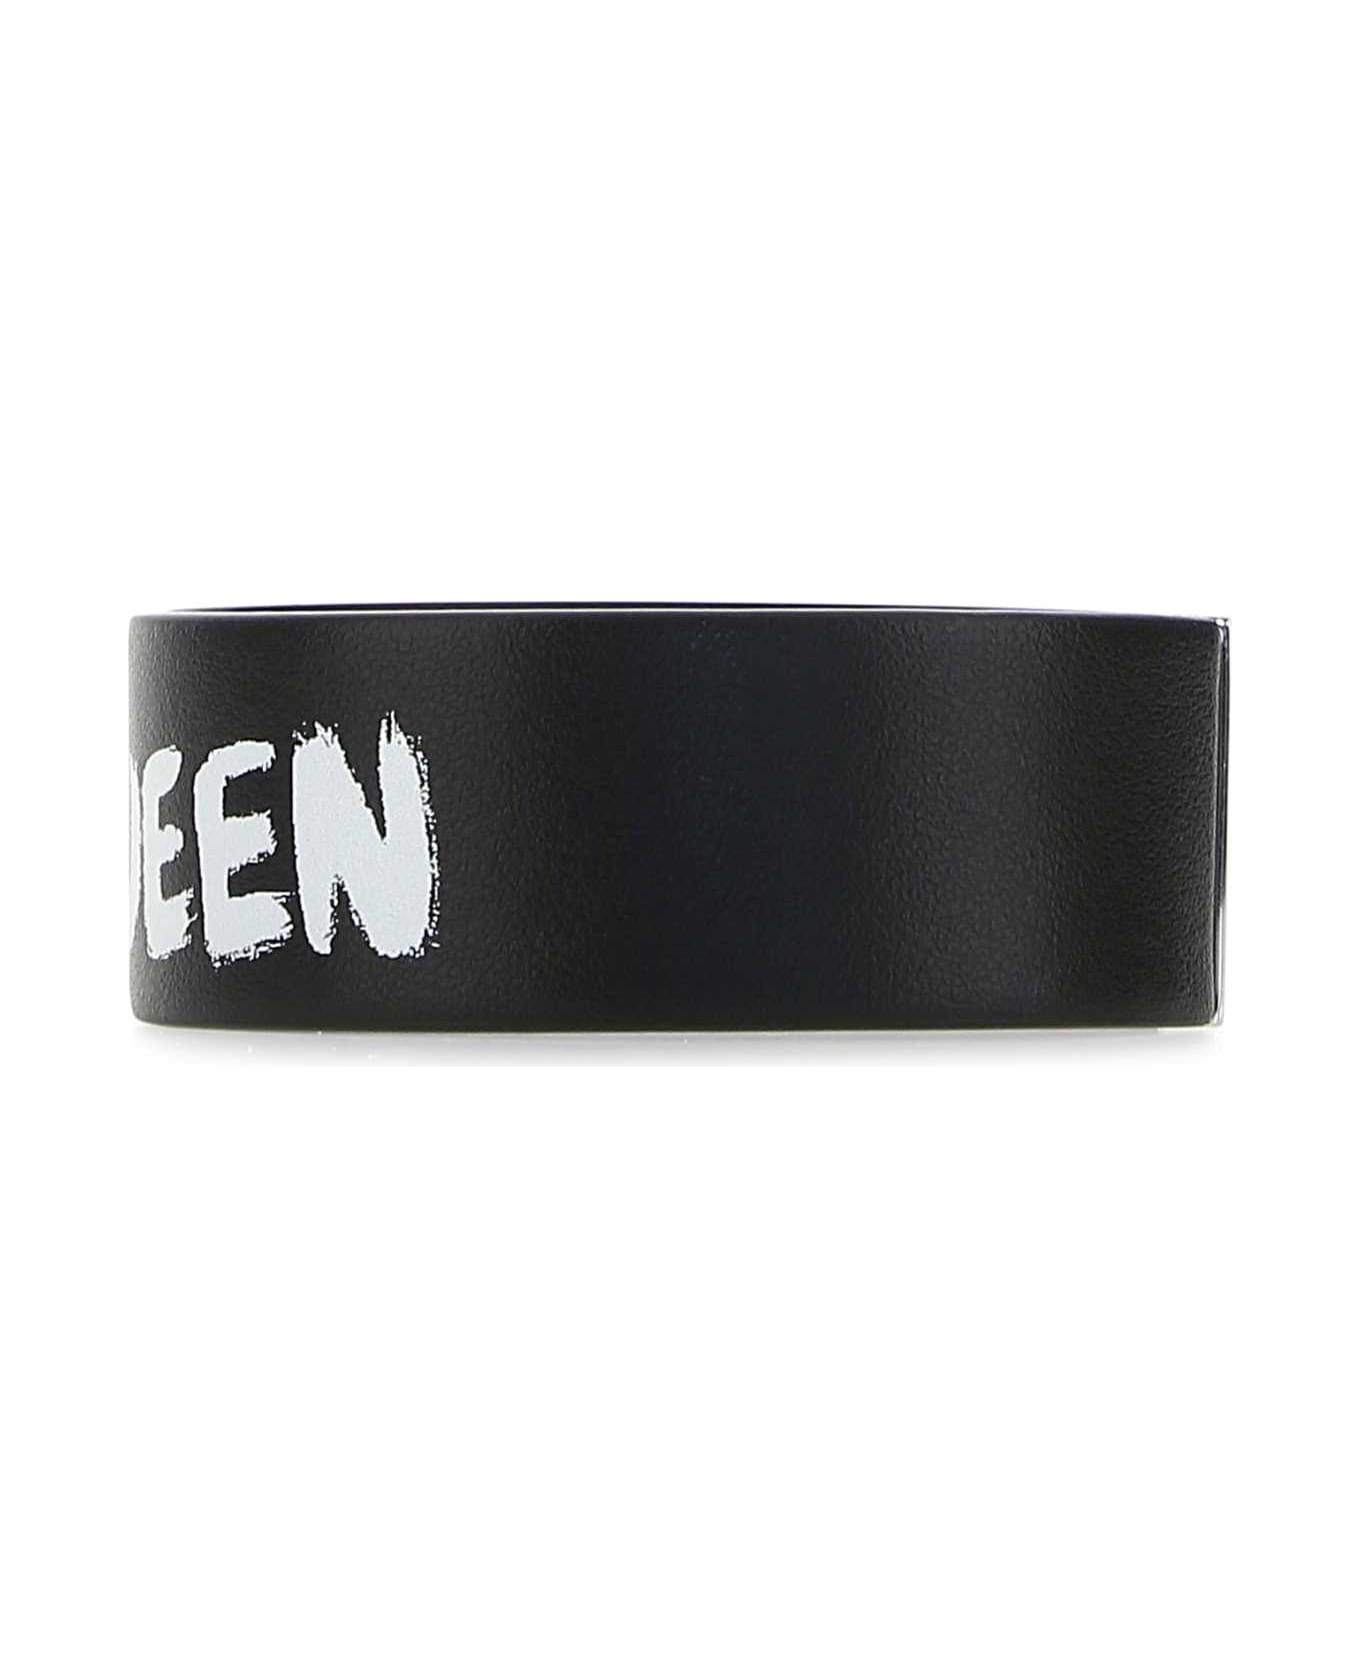 Alexander McQueen Black Leather Bracelet - 1070 ブレスレット